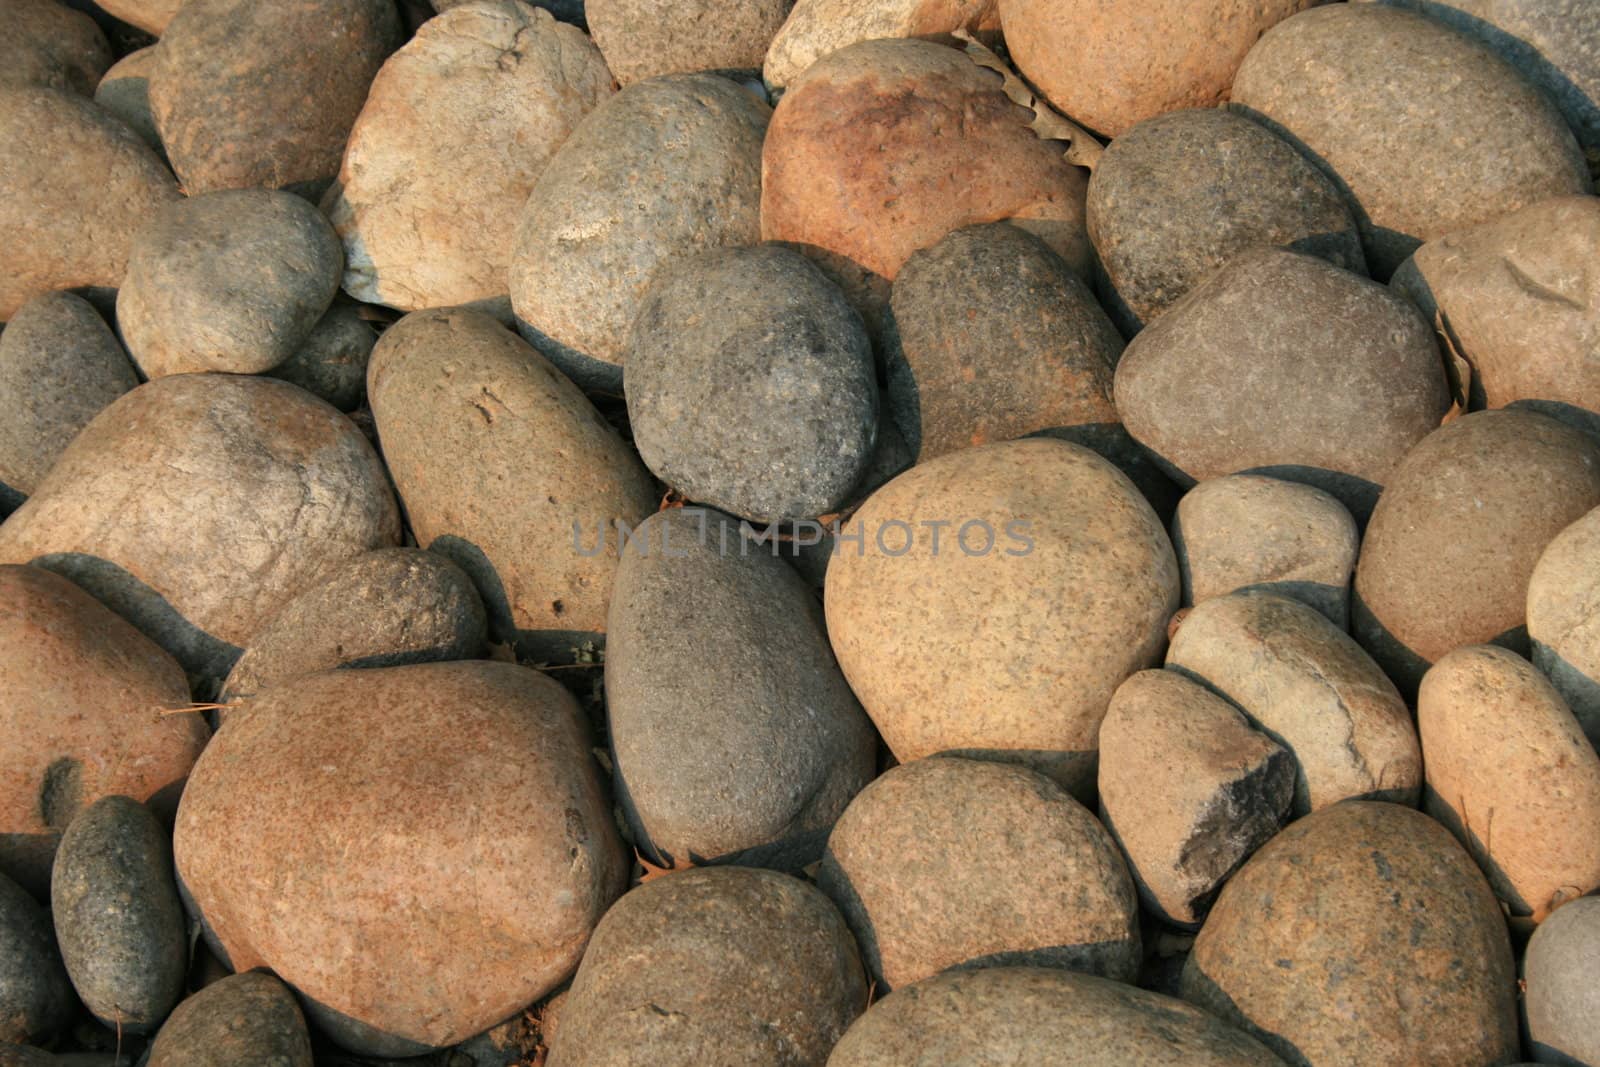 Close up of stones showing unique pattern.
